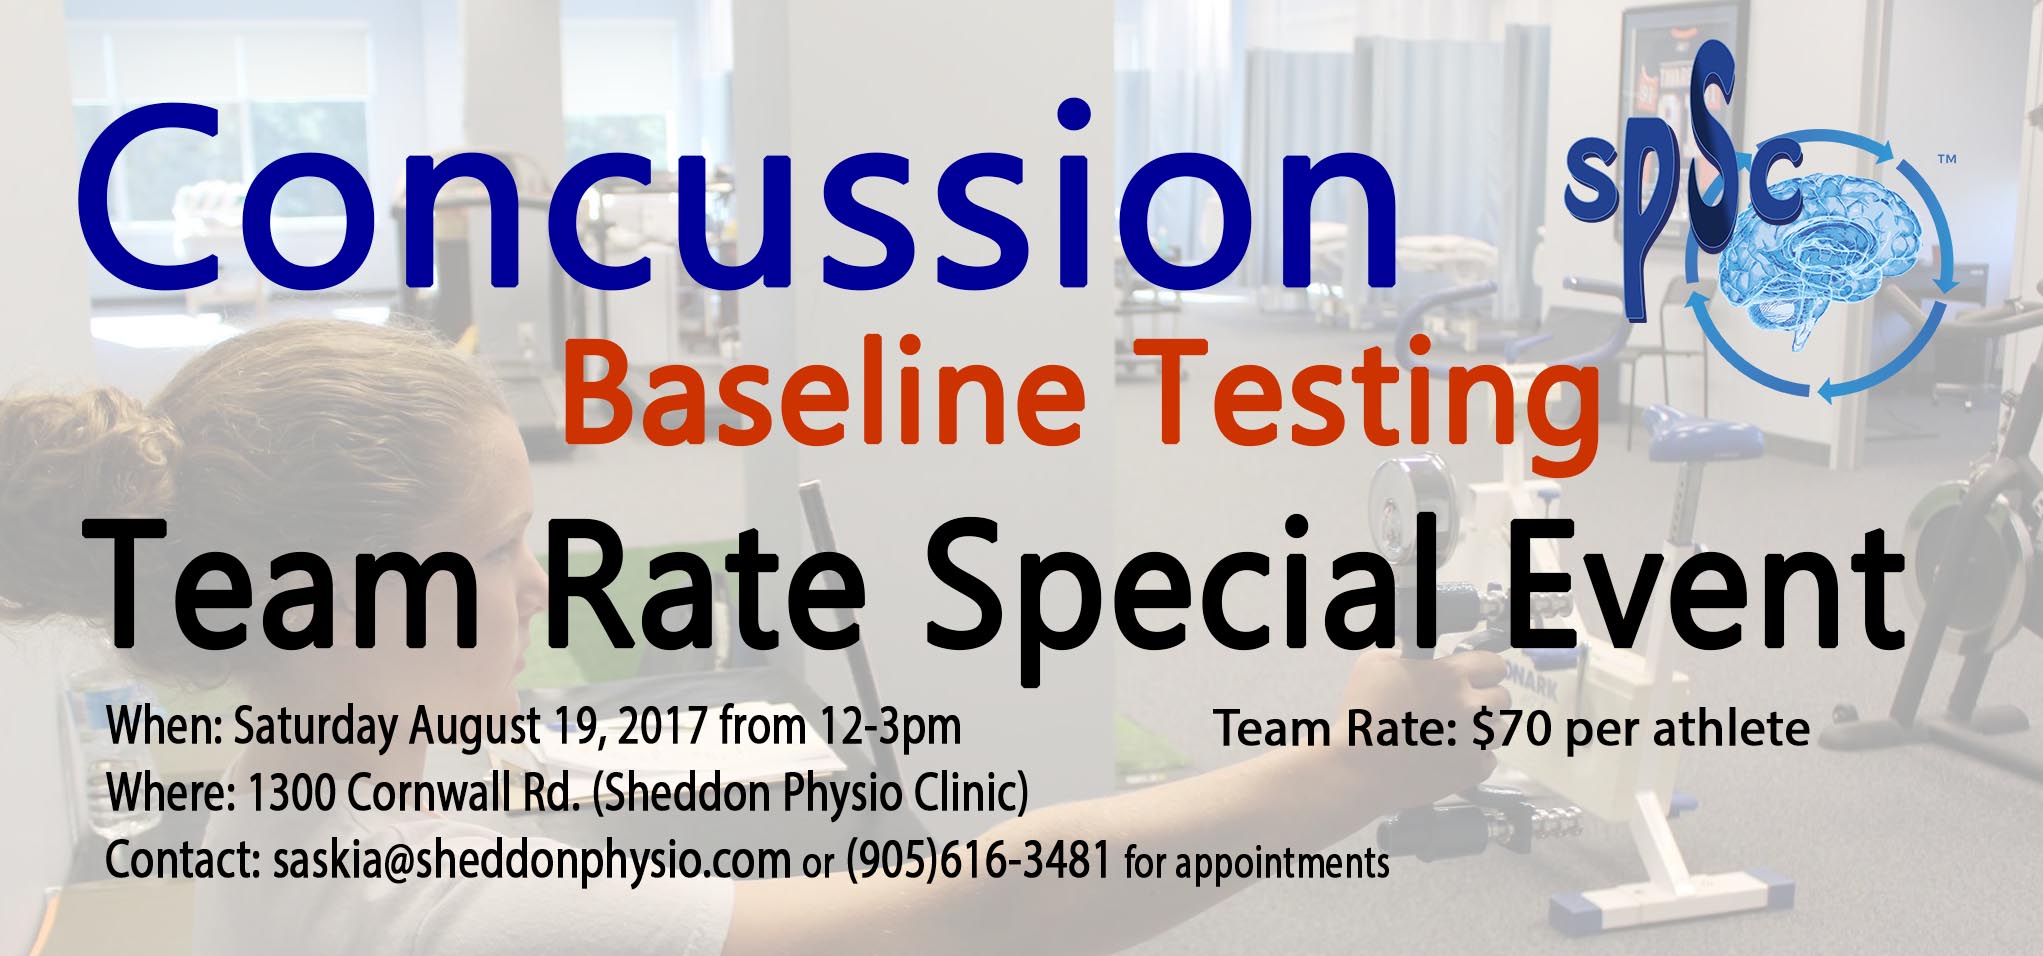 Concussion Baseline Testing 2017 Sheddon Physio Sports Clinic Oakville Mississauga